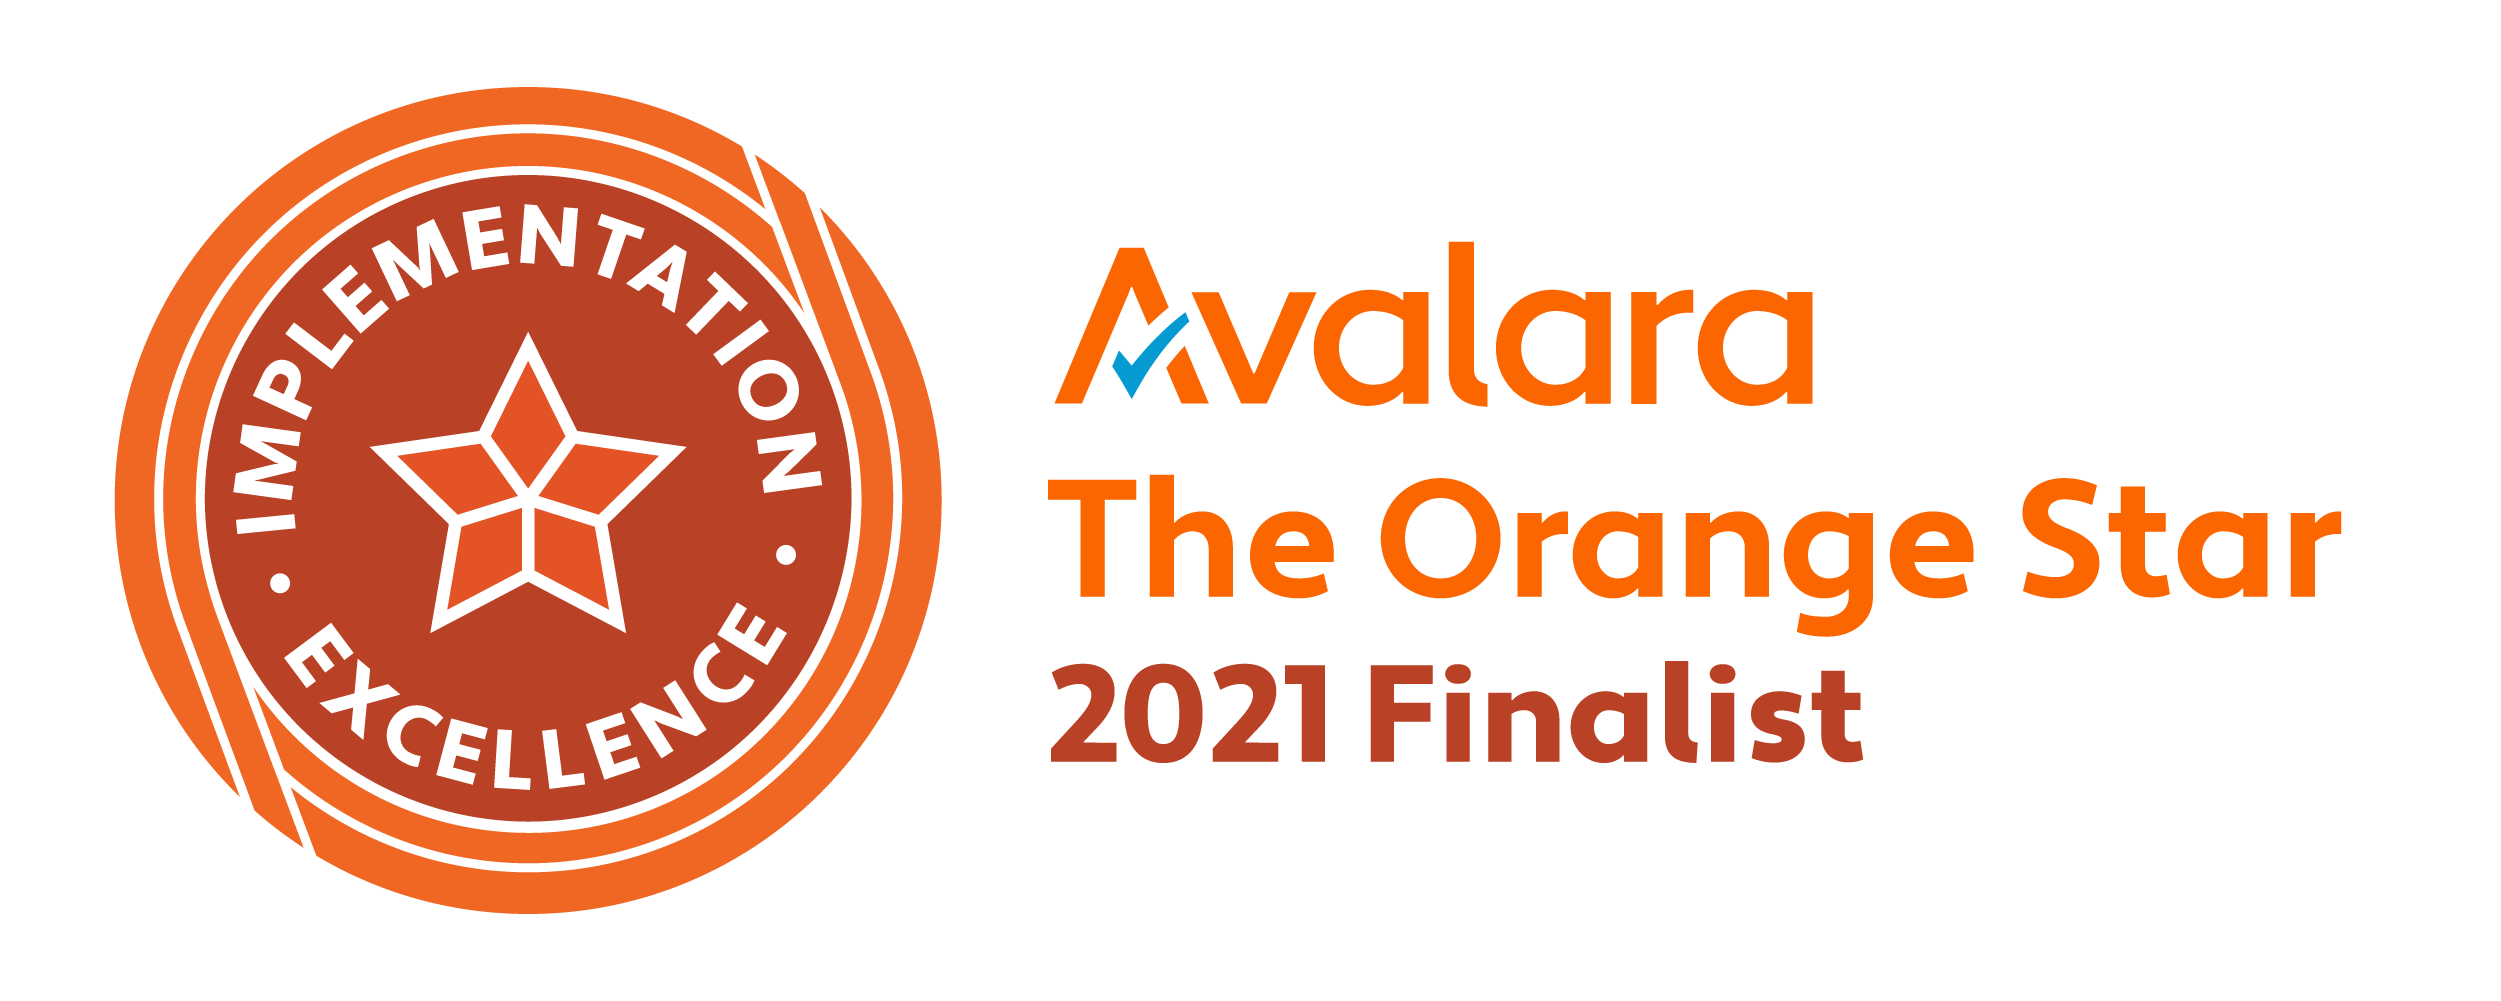 Avalara_OrangeStar_ImplementExcellence_2021_Finalist